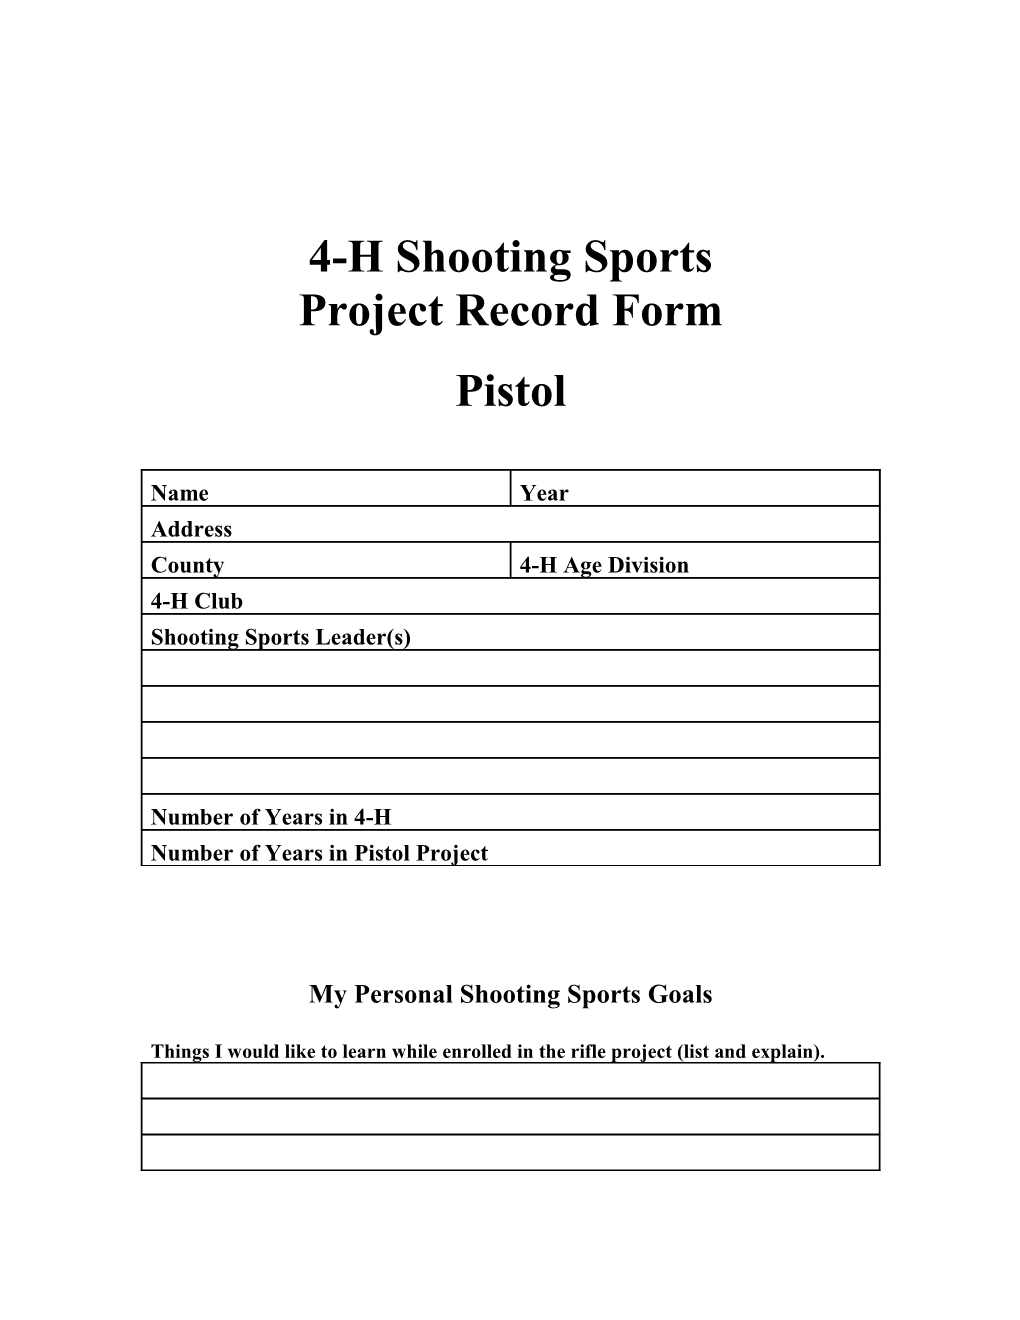 4-H Shooting Sports Pistol